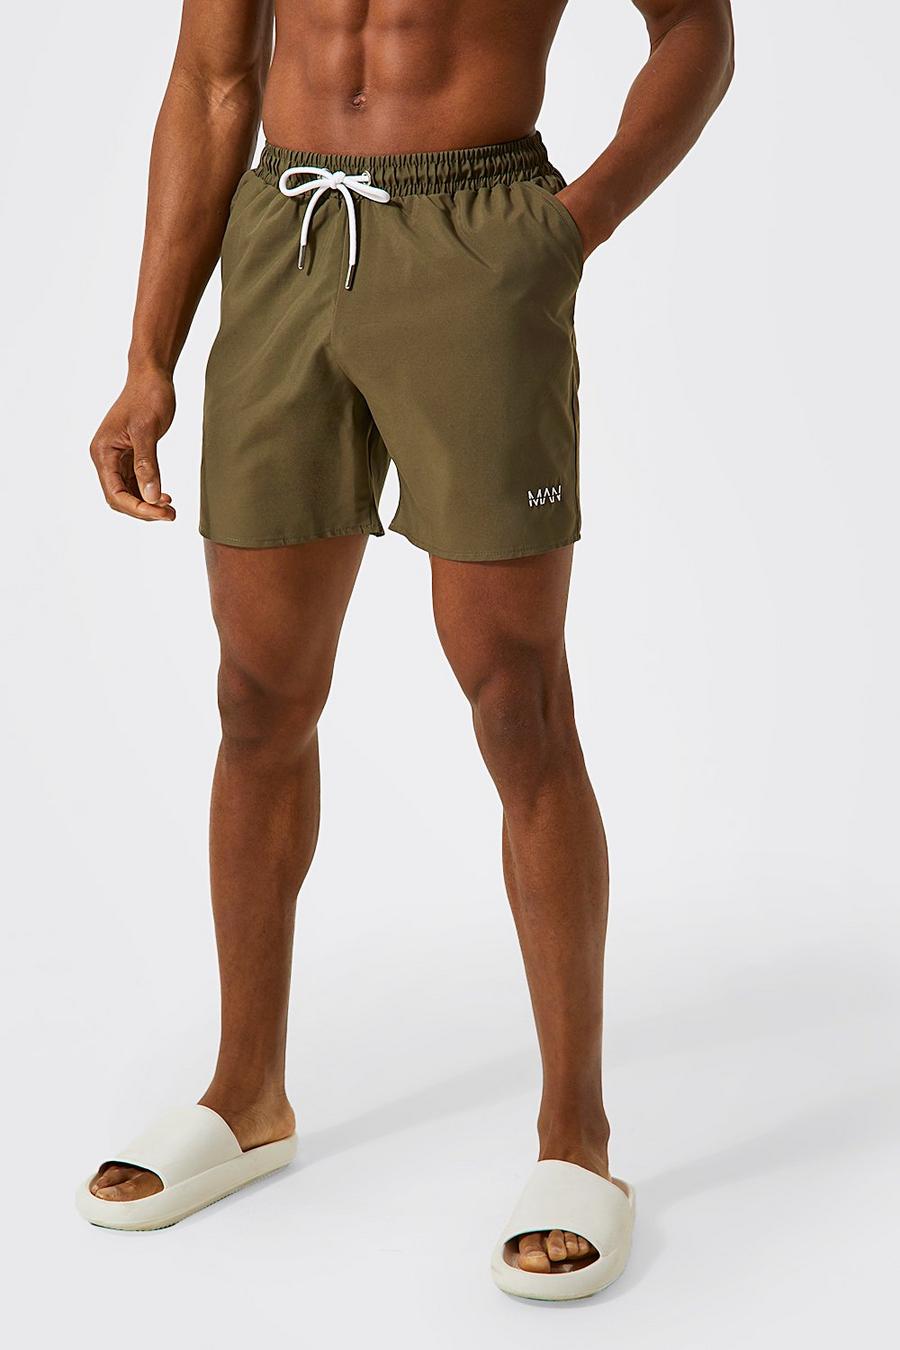 https://media.boohoo.com/i/boohoo/bmm01926_khaki_xl/male-khaki-original-man-mid-length-swim-shorts/?w=900&qlt=default&fmt.jp2.qlt=70&fmt=auto&sm=fit